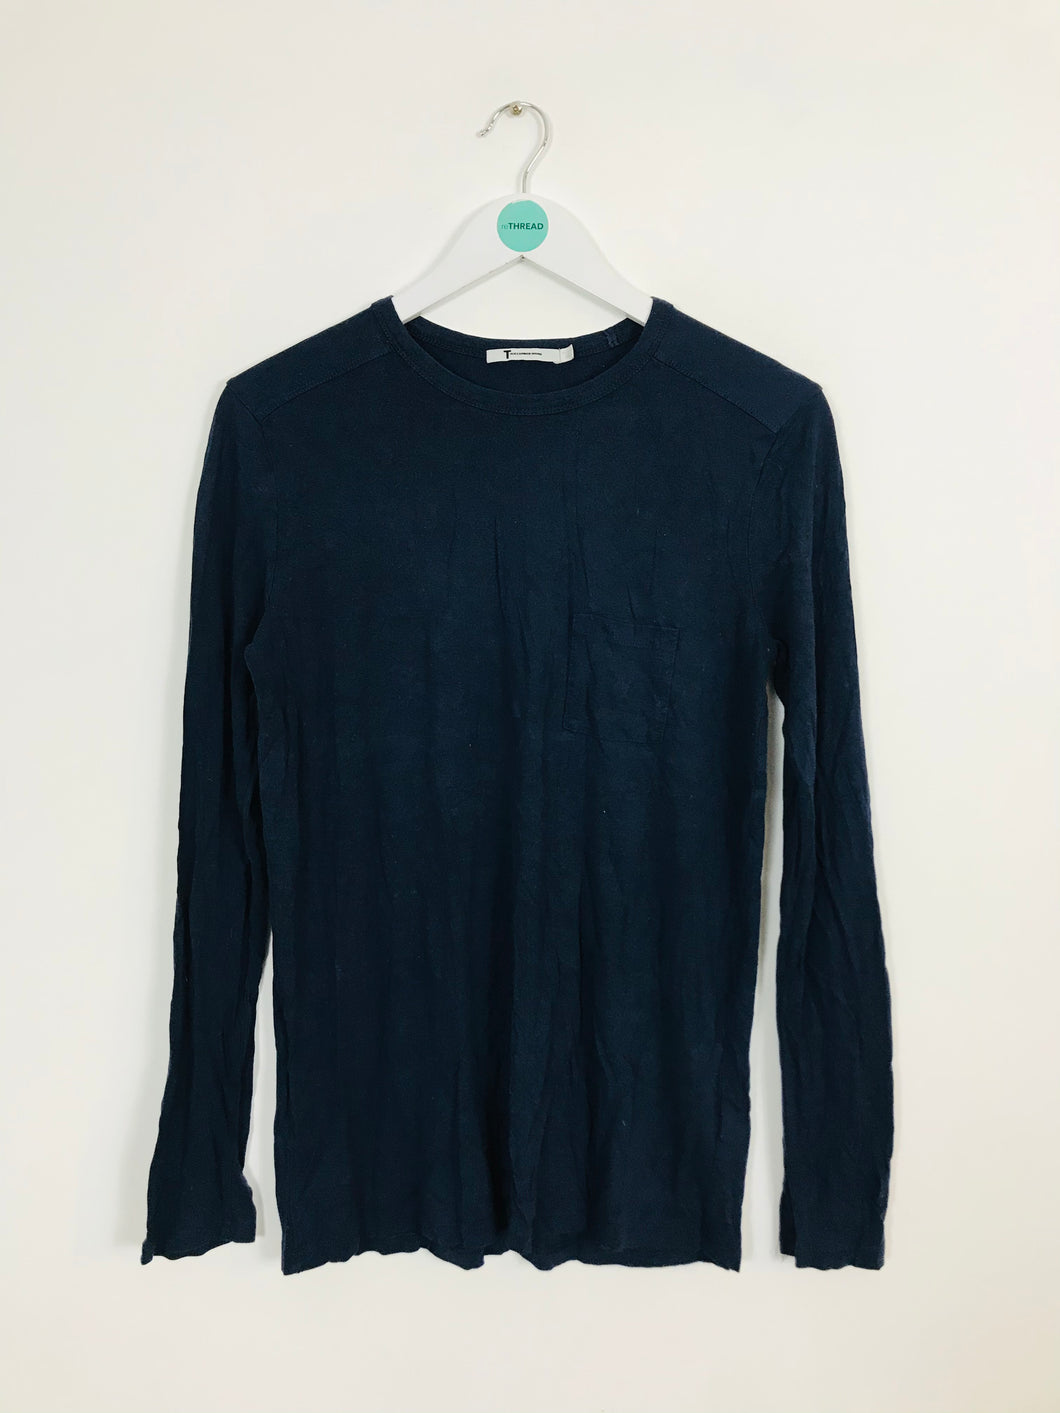 Alexander Wang Women’s Long Sleeve Tshirt | M UK 10-12 | Blue